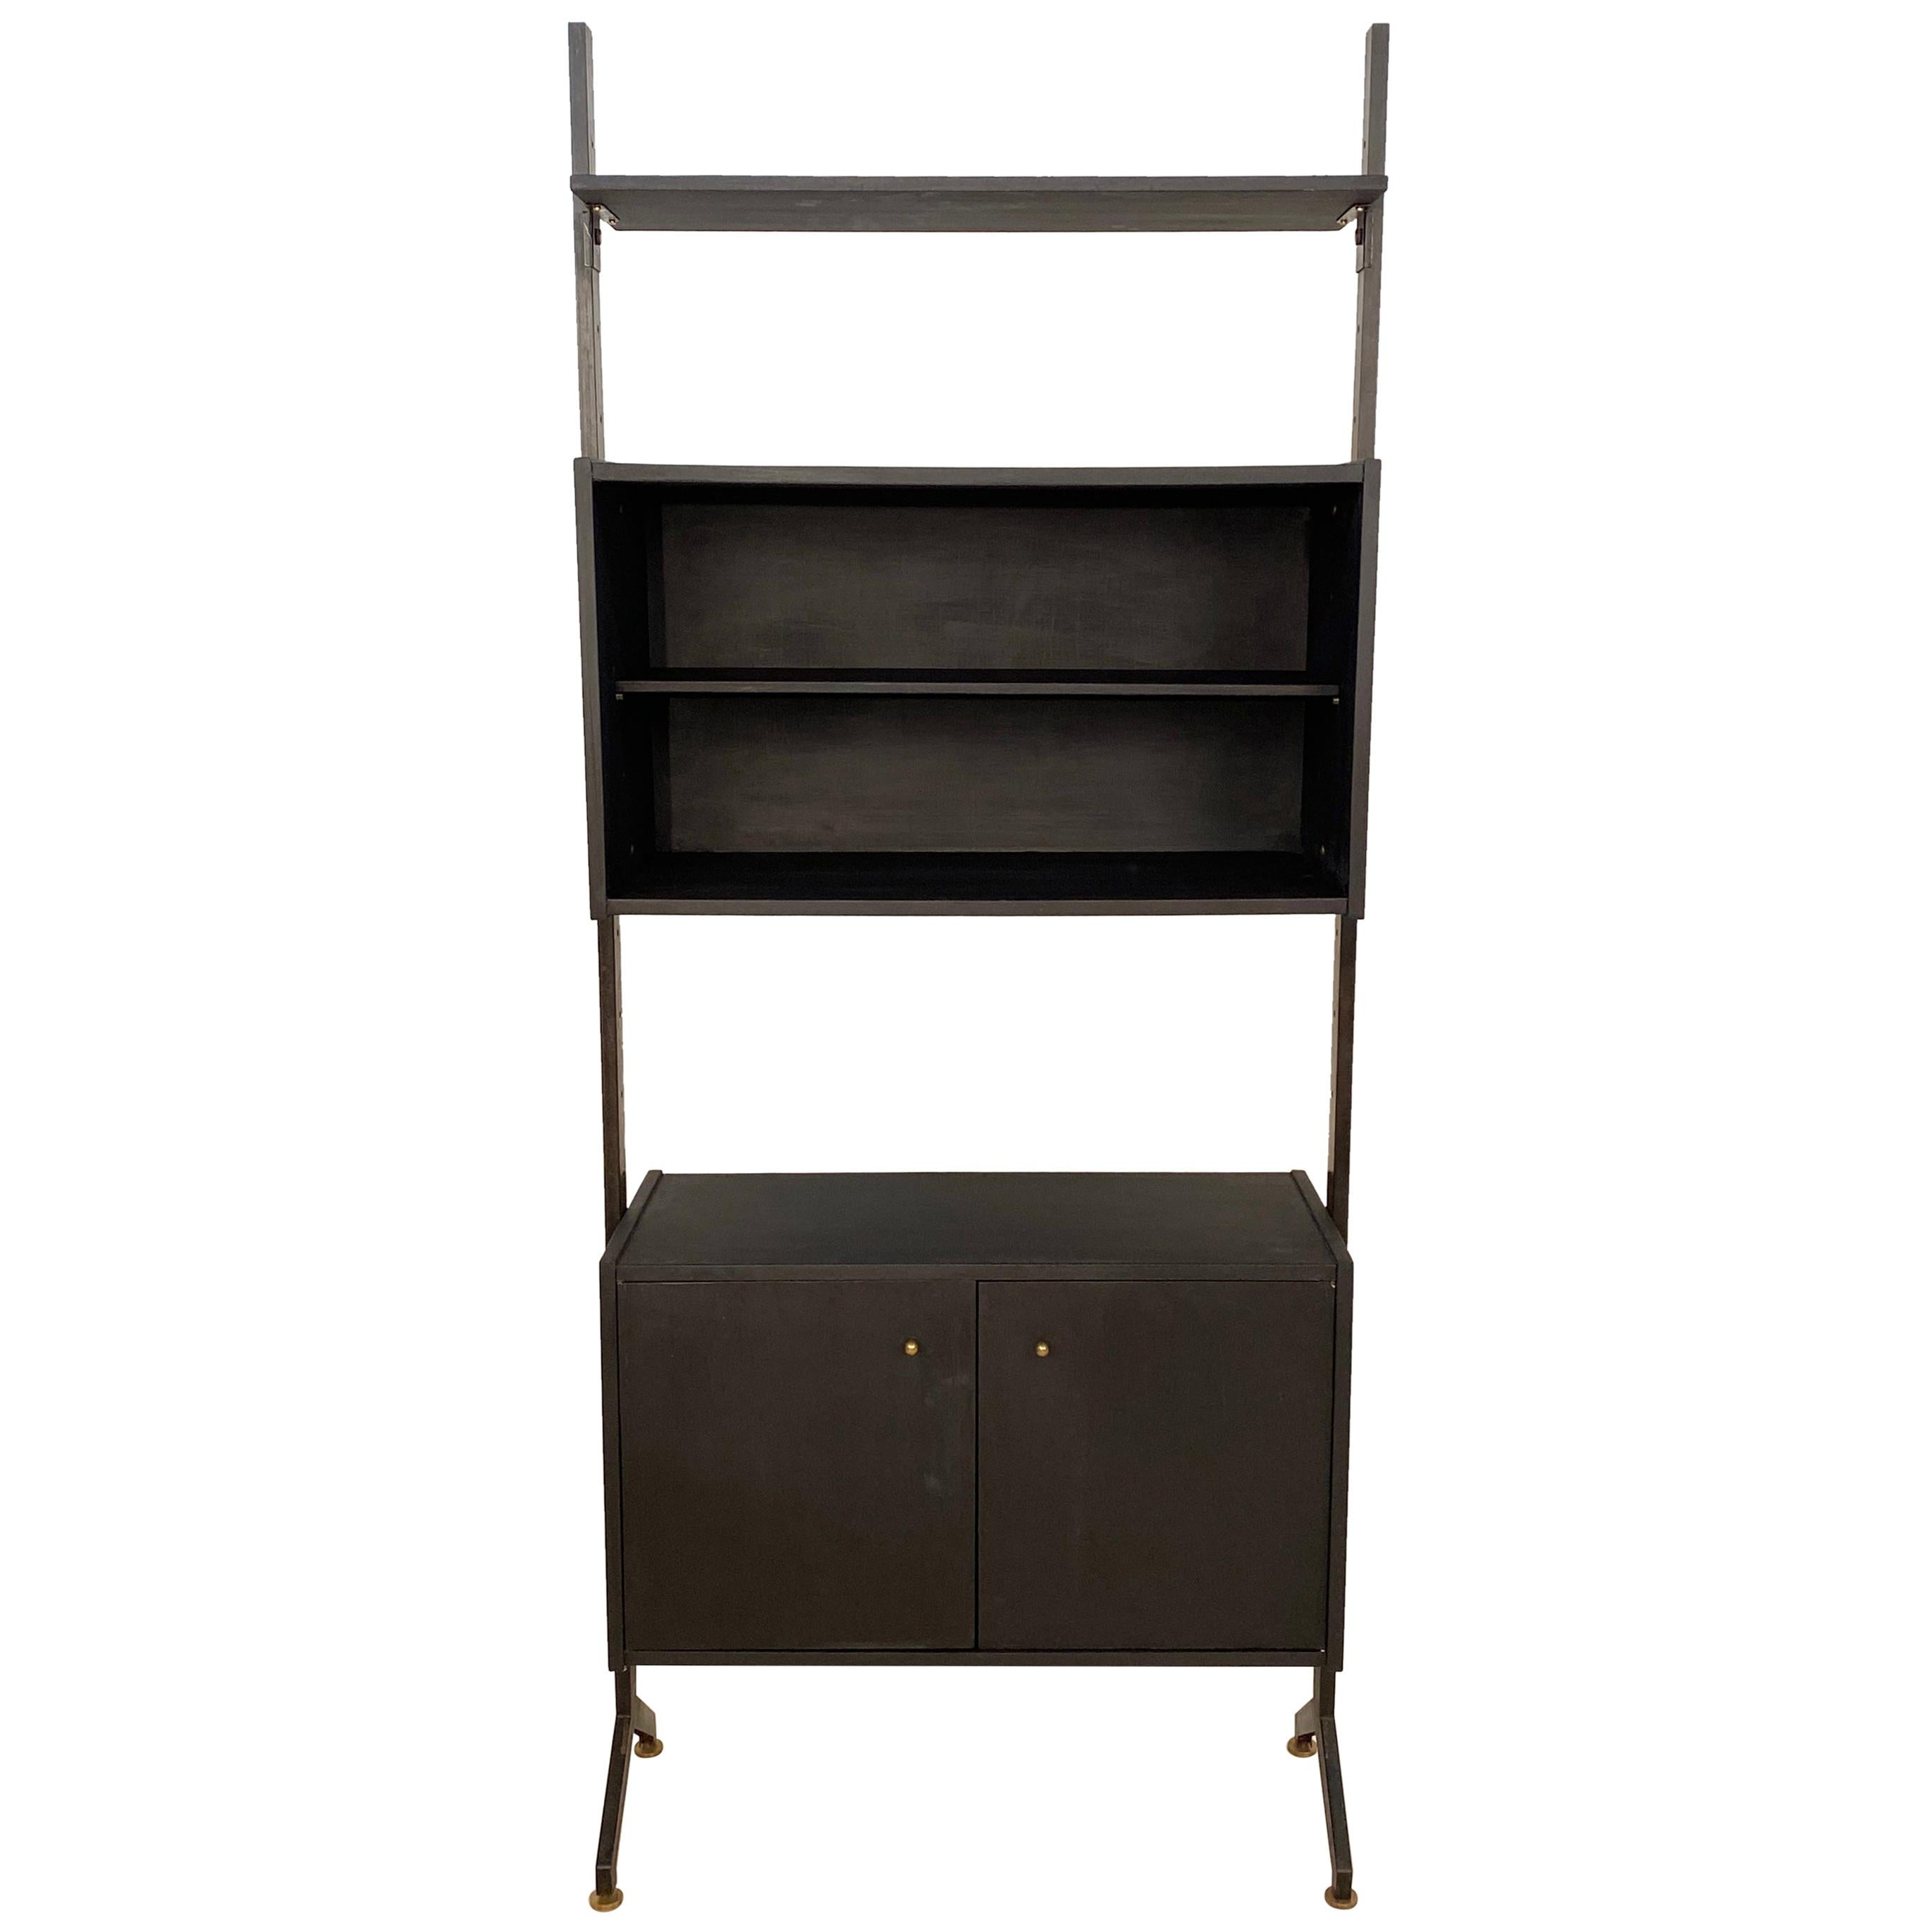 Midcentury Black Italian Shelf or Room Divider by BR Italia Metal and Wood, 1960